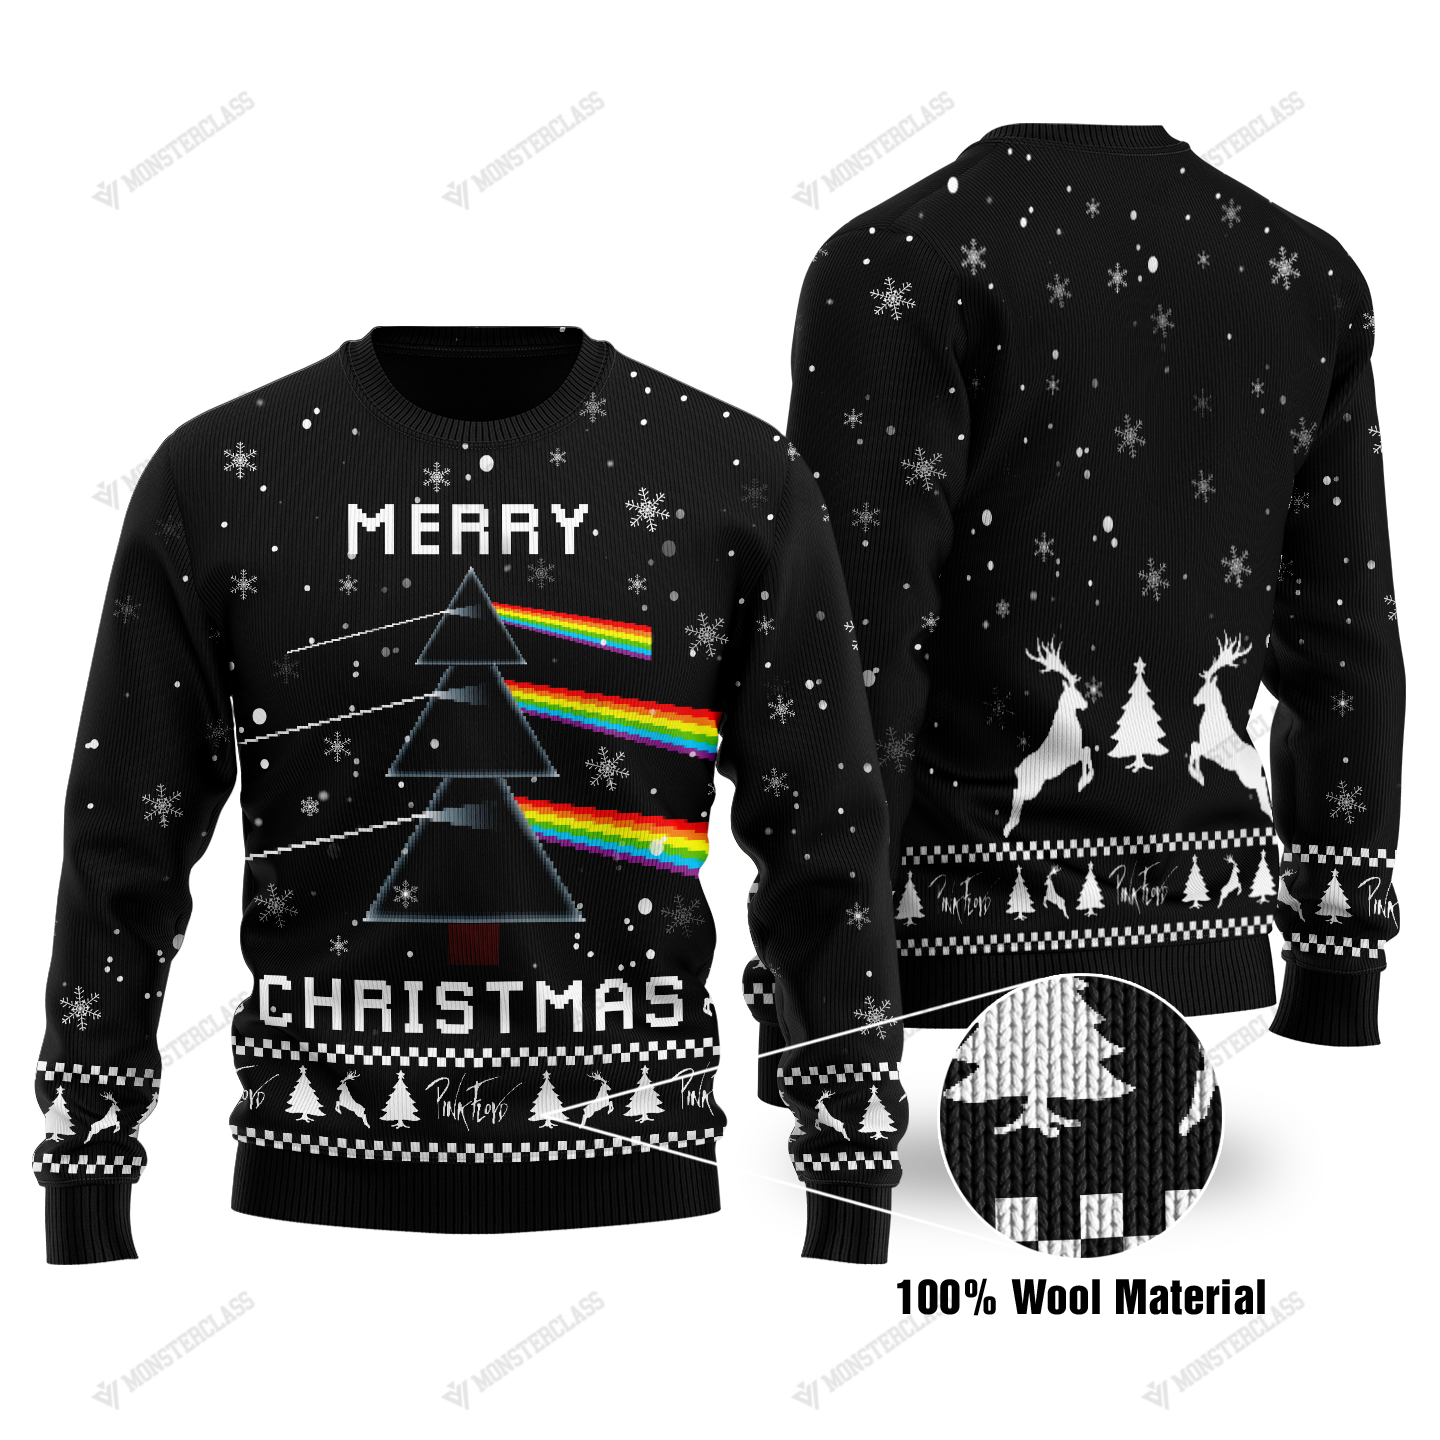 Merry Christmas Pink Floyd christmas sweater